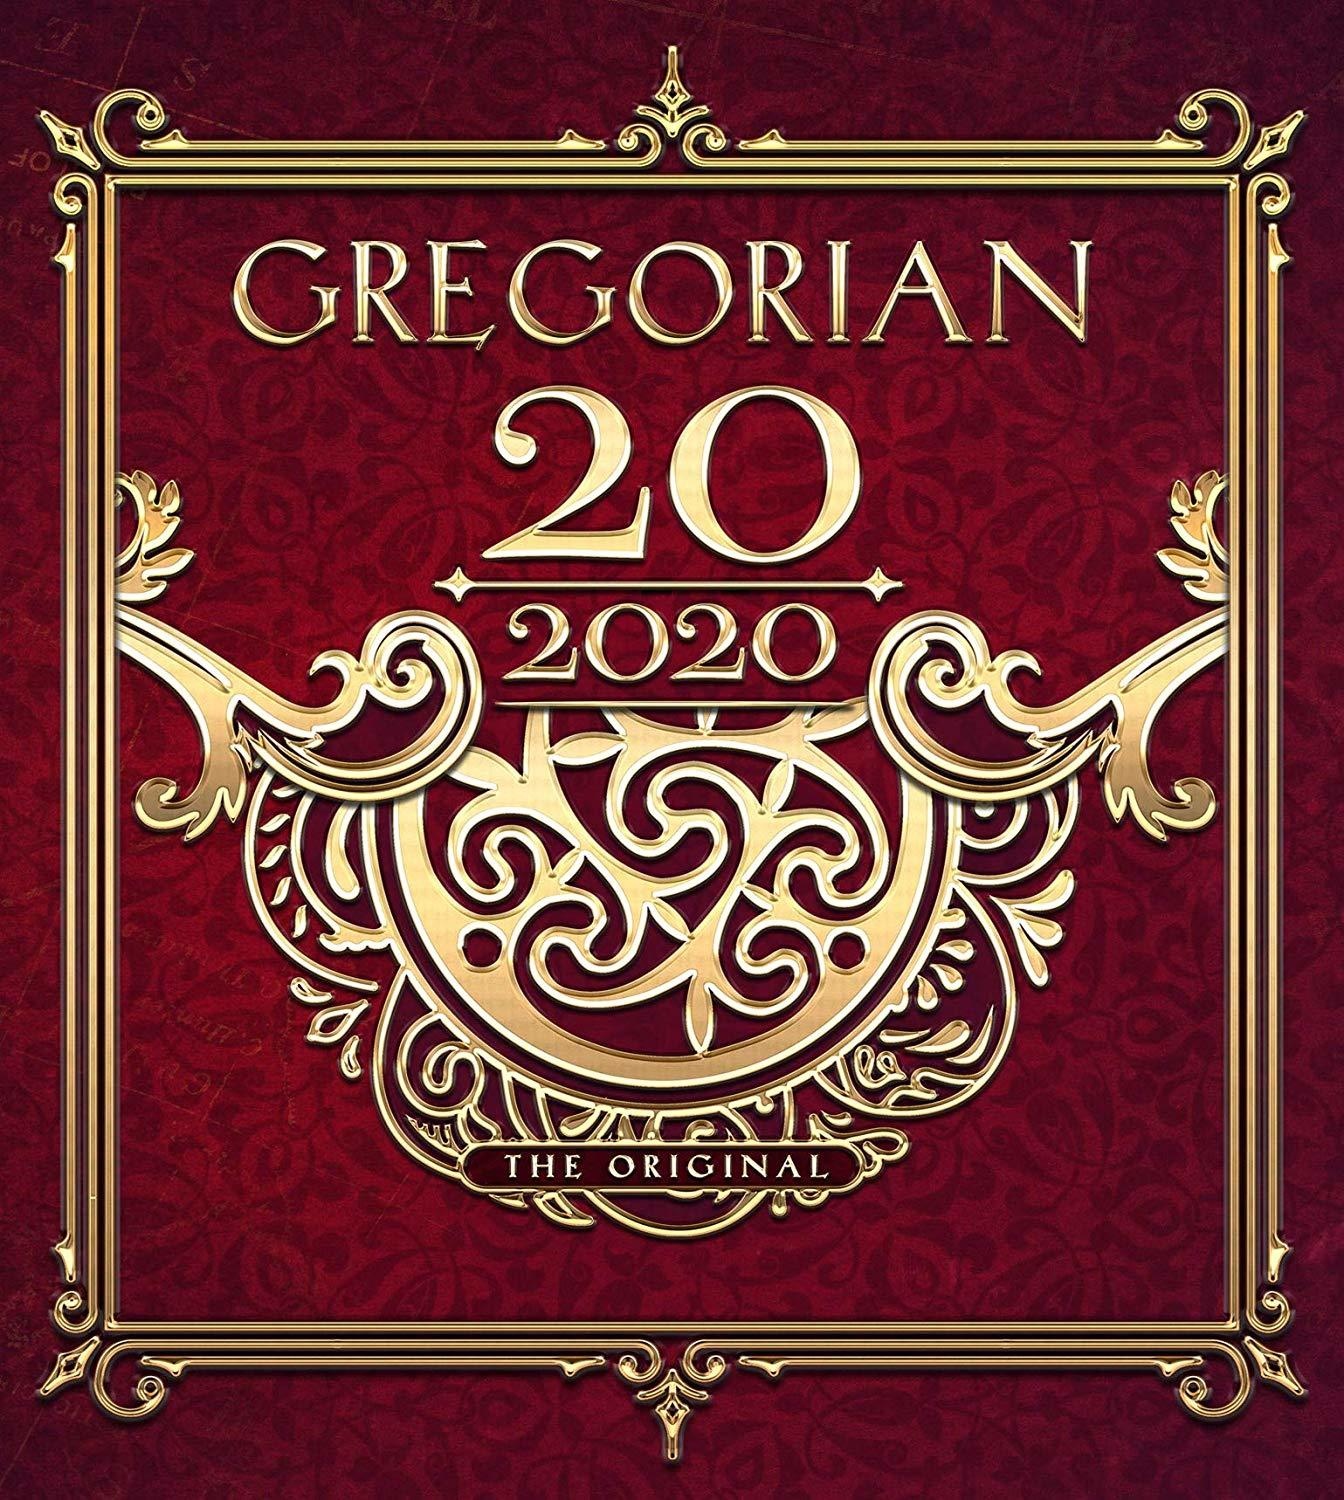 Gregorian - (Limited Video) (CD DVD + Set) - 20/2020 Box